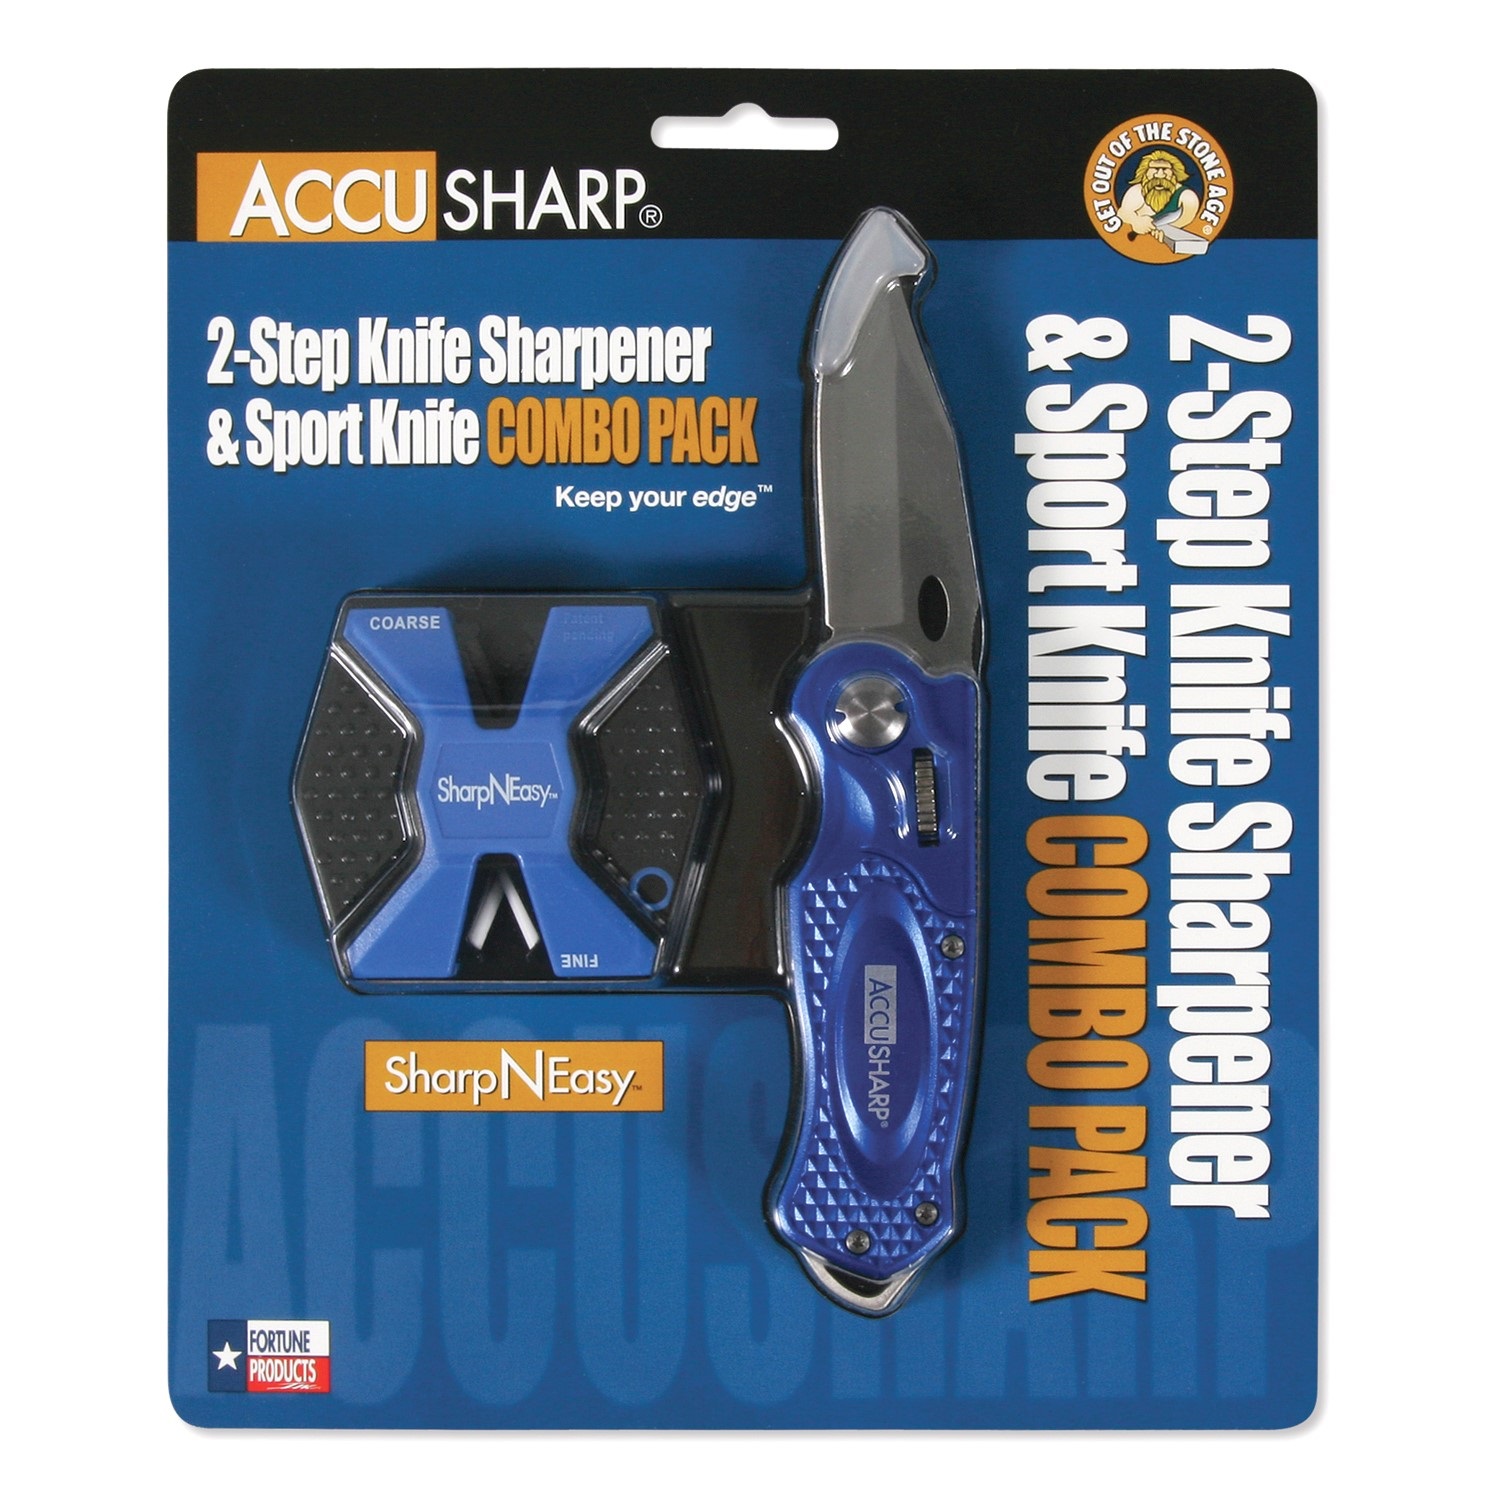 Accusharp Fishing KNIFE SHARPENER - Sturdy Mount